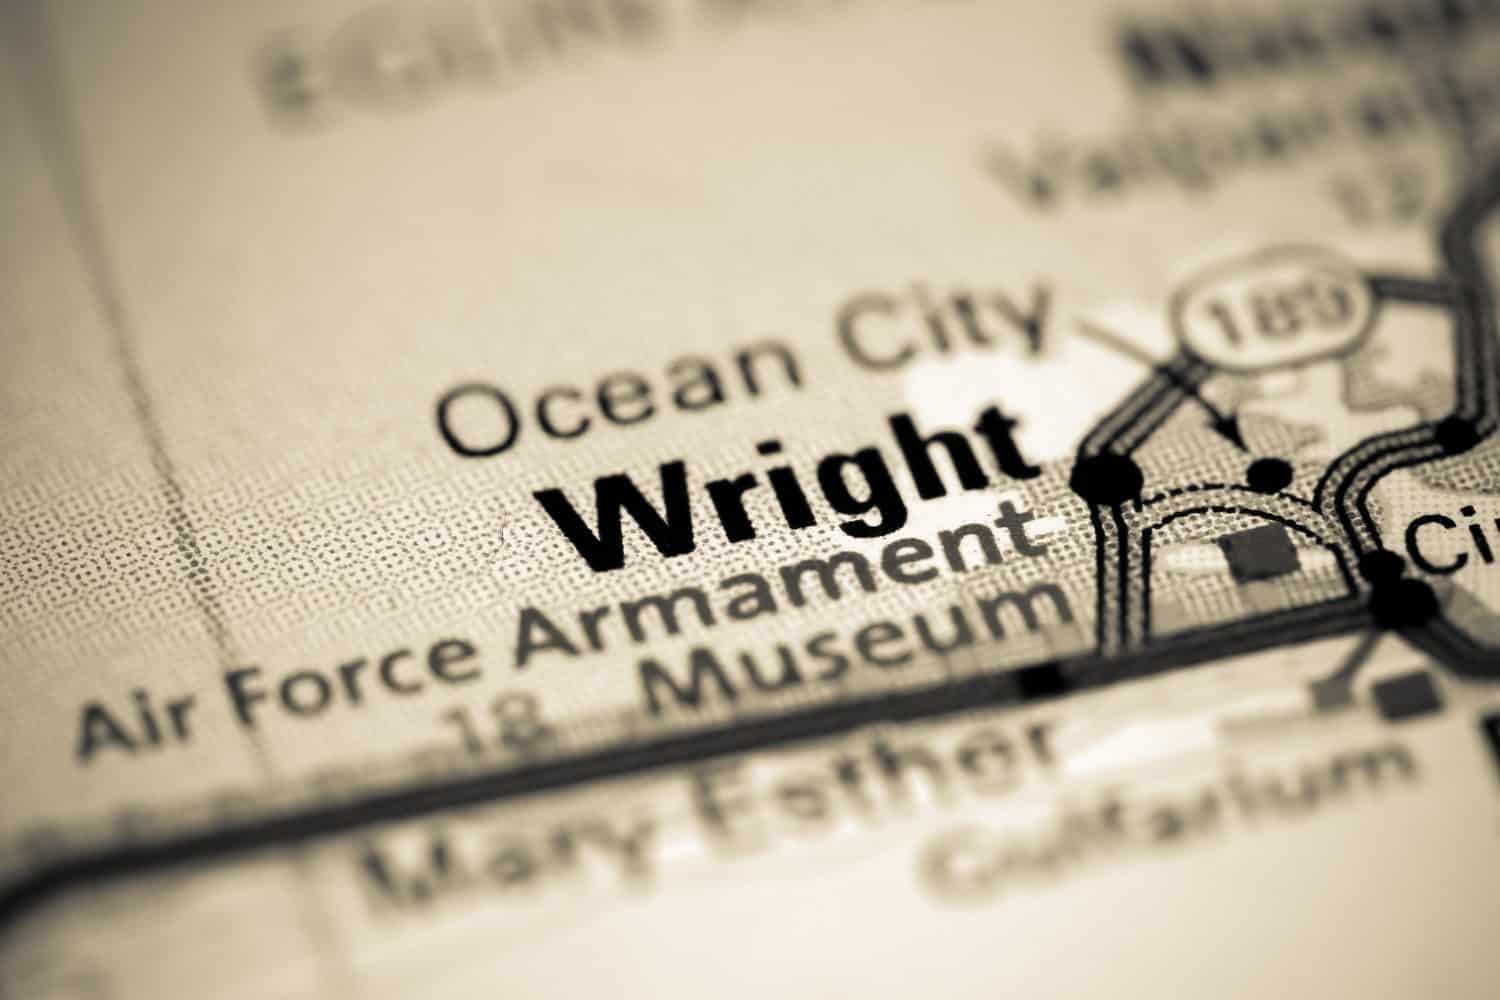 Wright. Florida. USA on a map